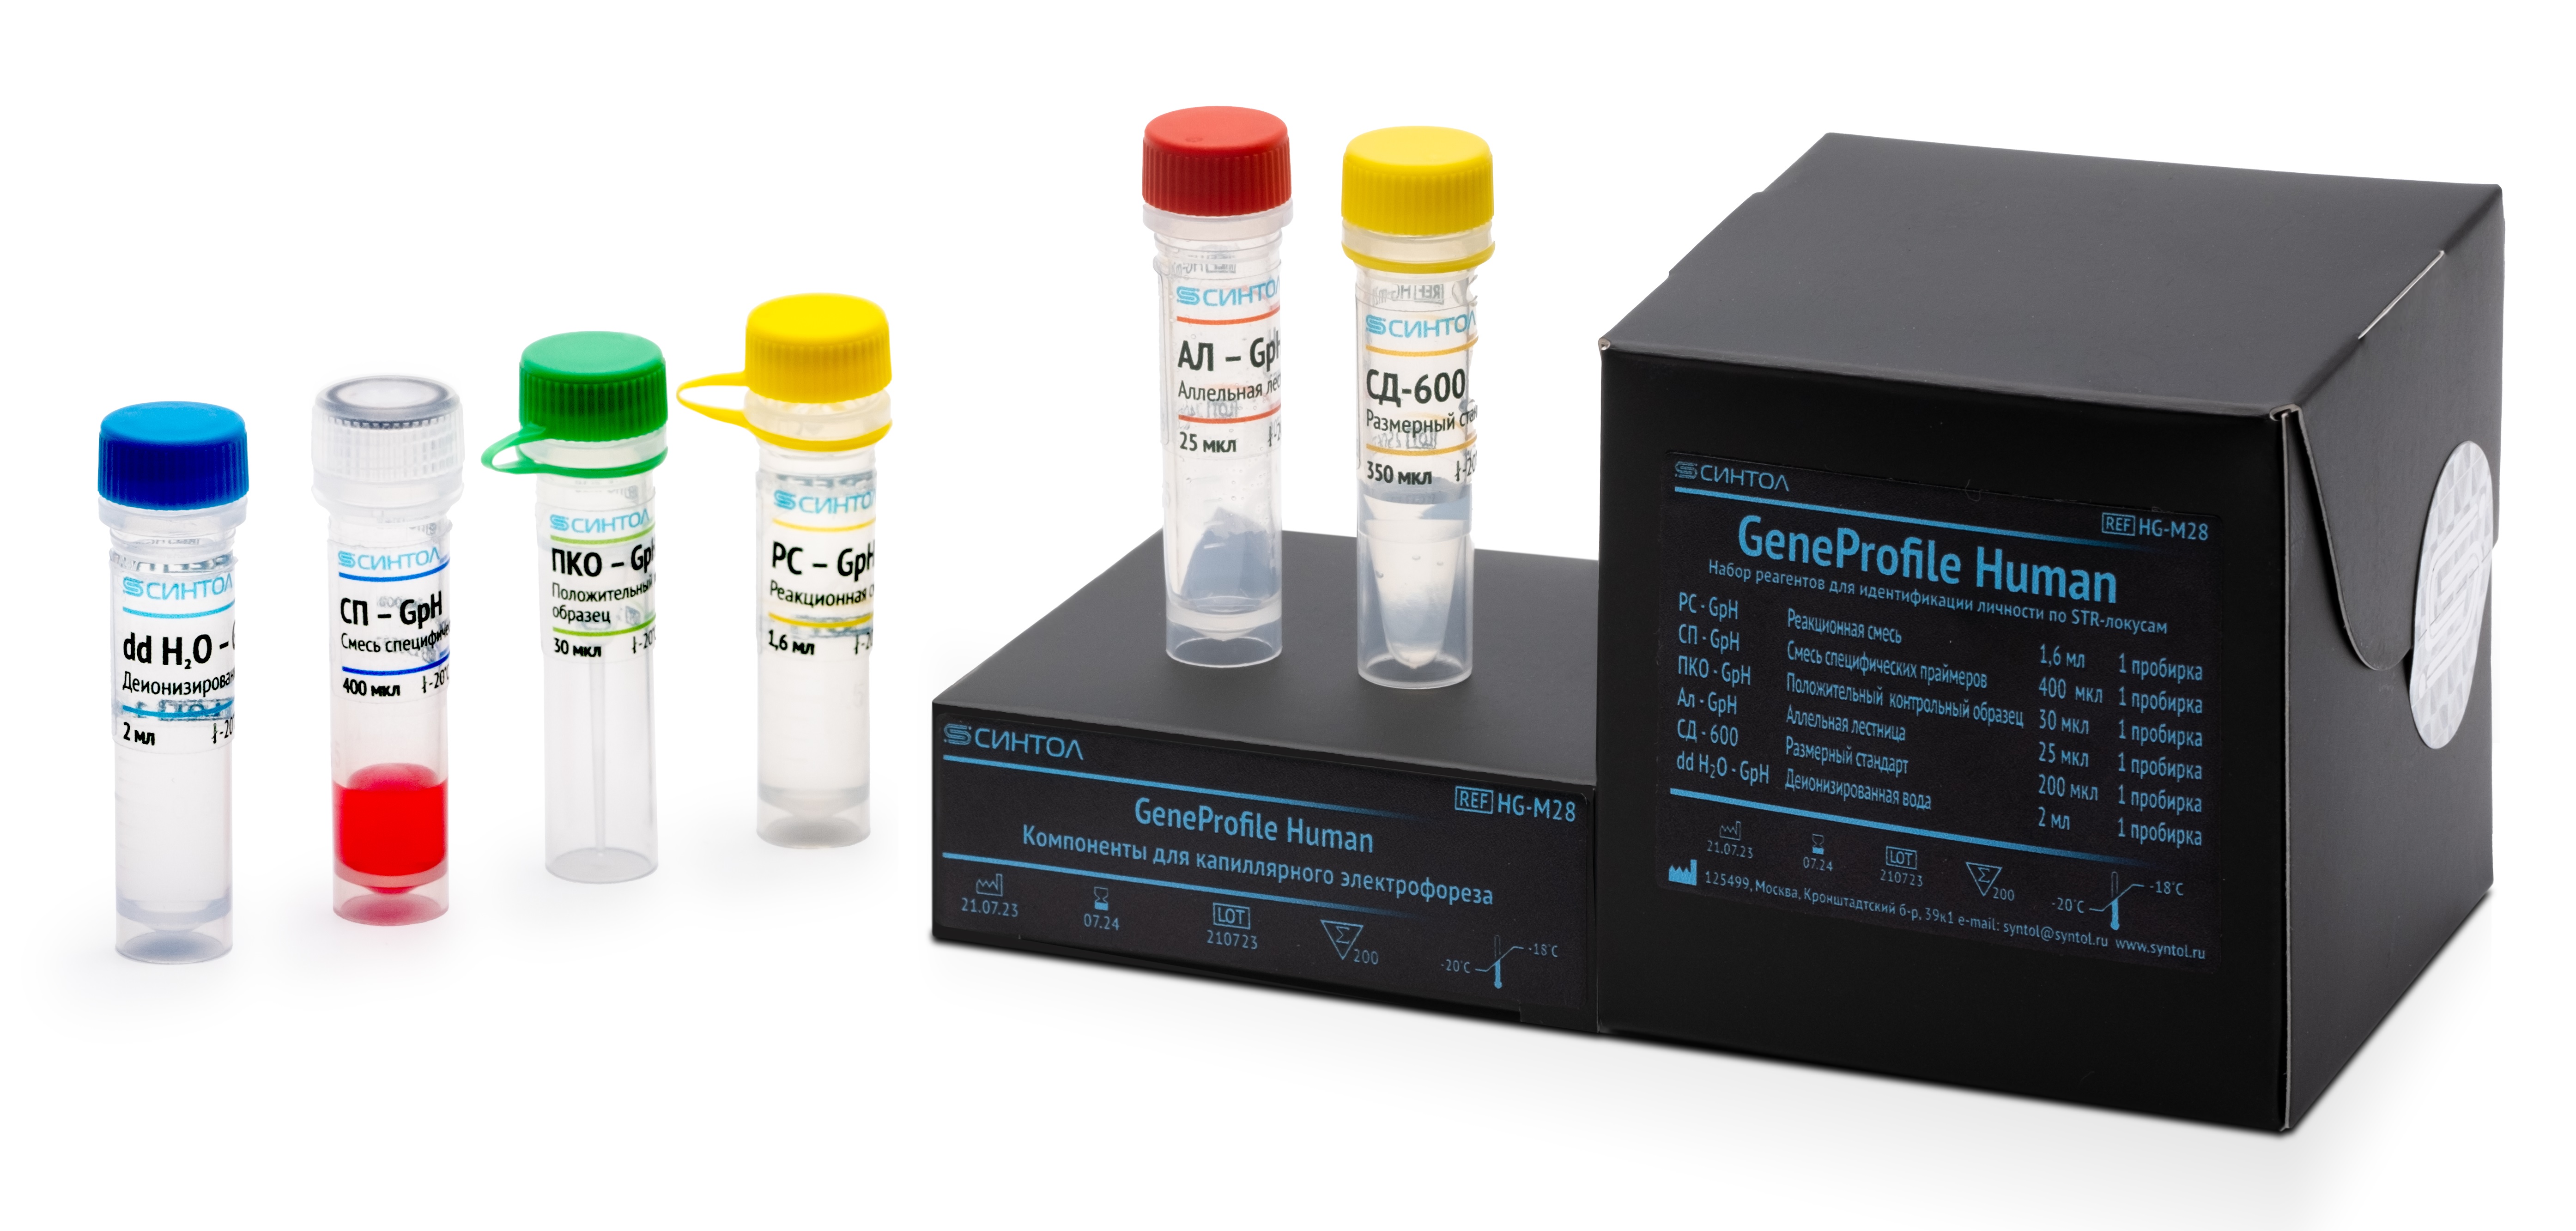 «Gene Profile Human» reagent kit for personal identification using 28 STR loci